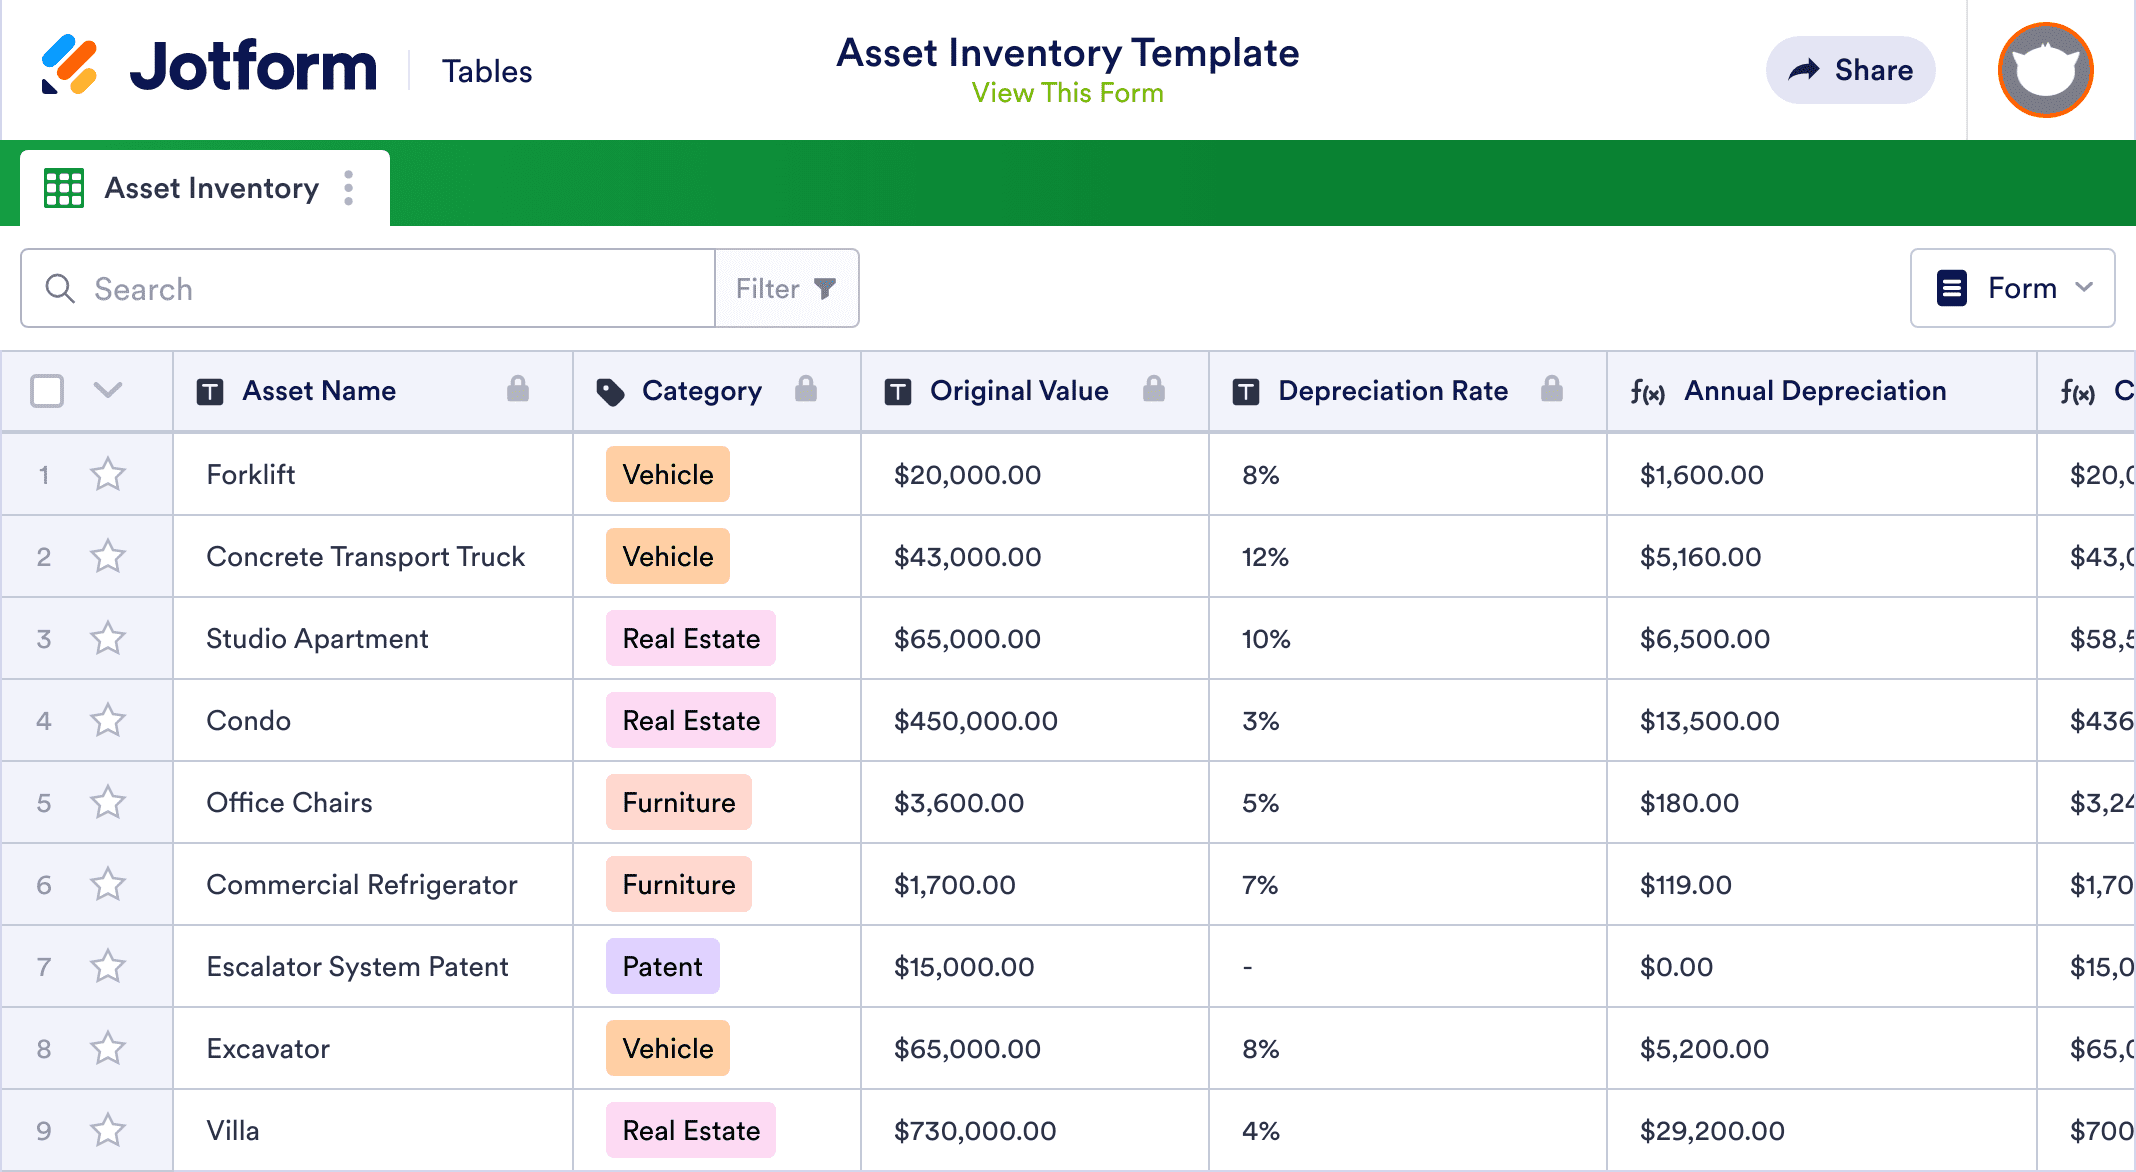 Asset Inventory Template | Jotform Tables